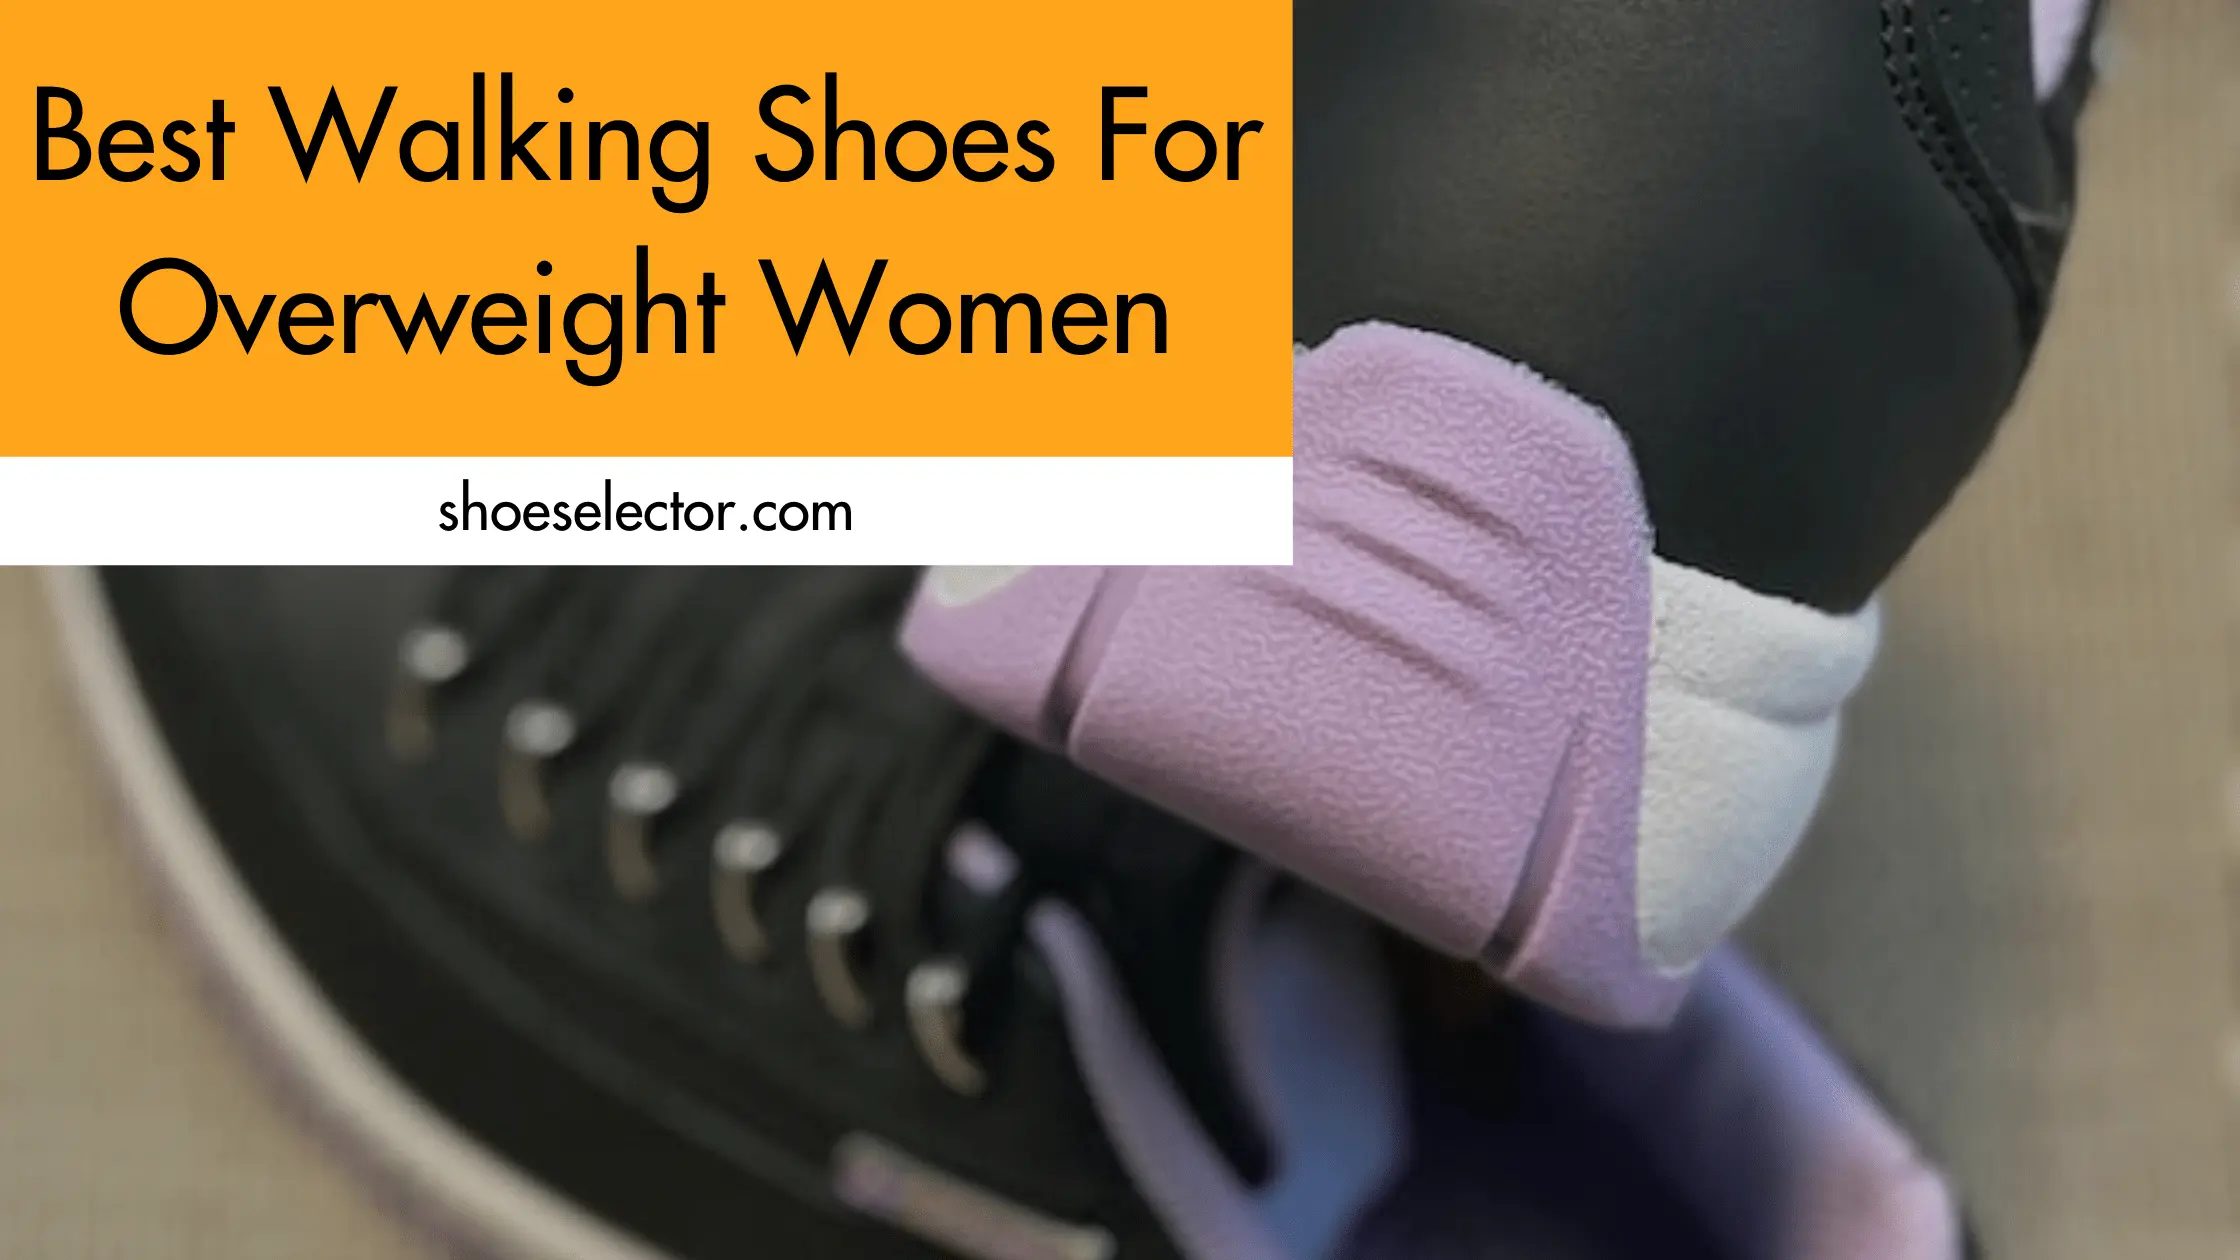 Best Walking Shoes For Overweight Women - Expert Choice